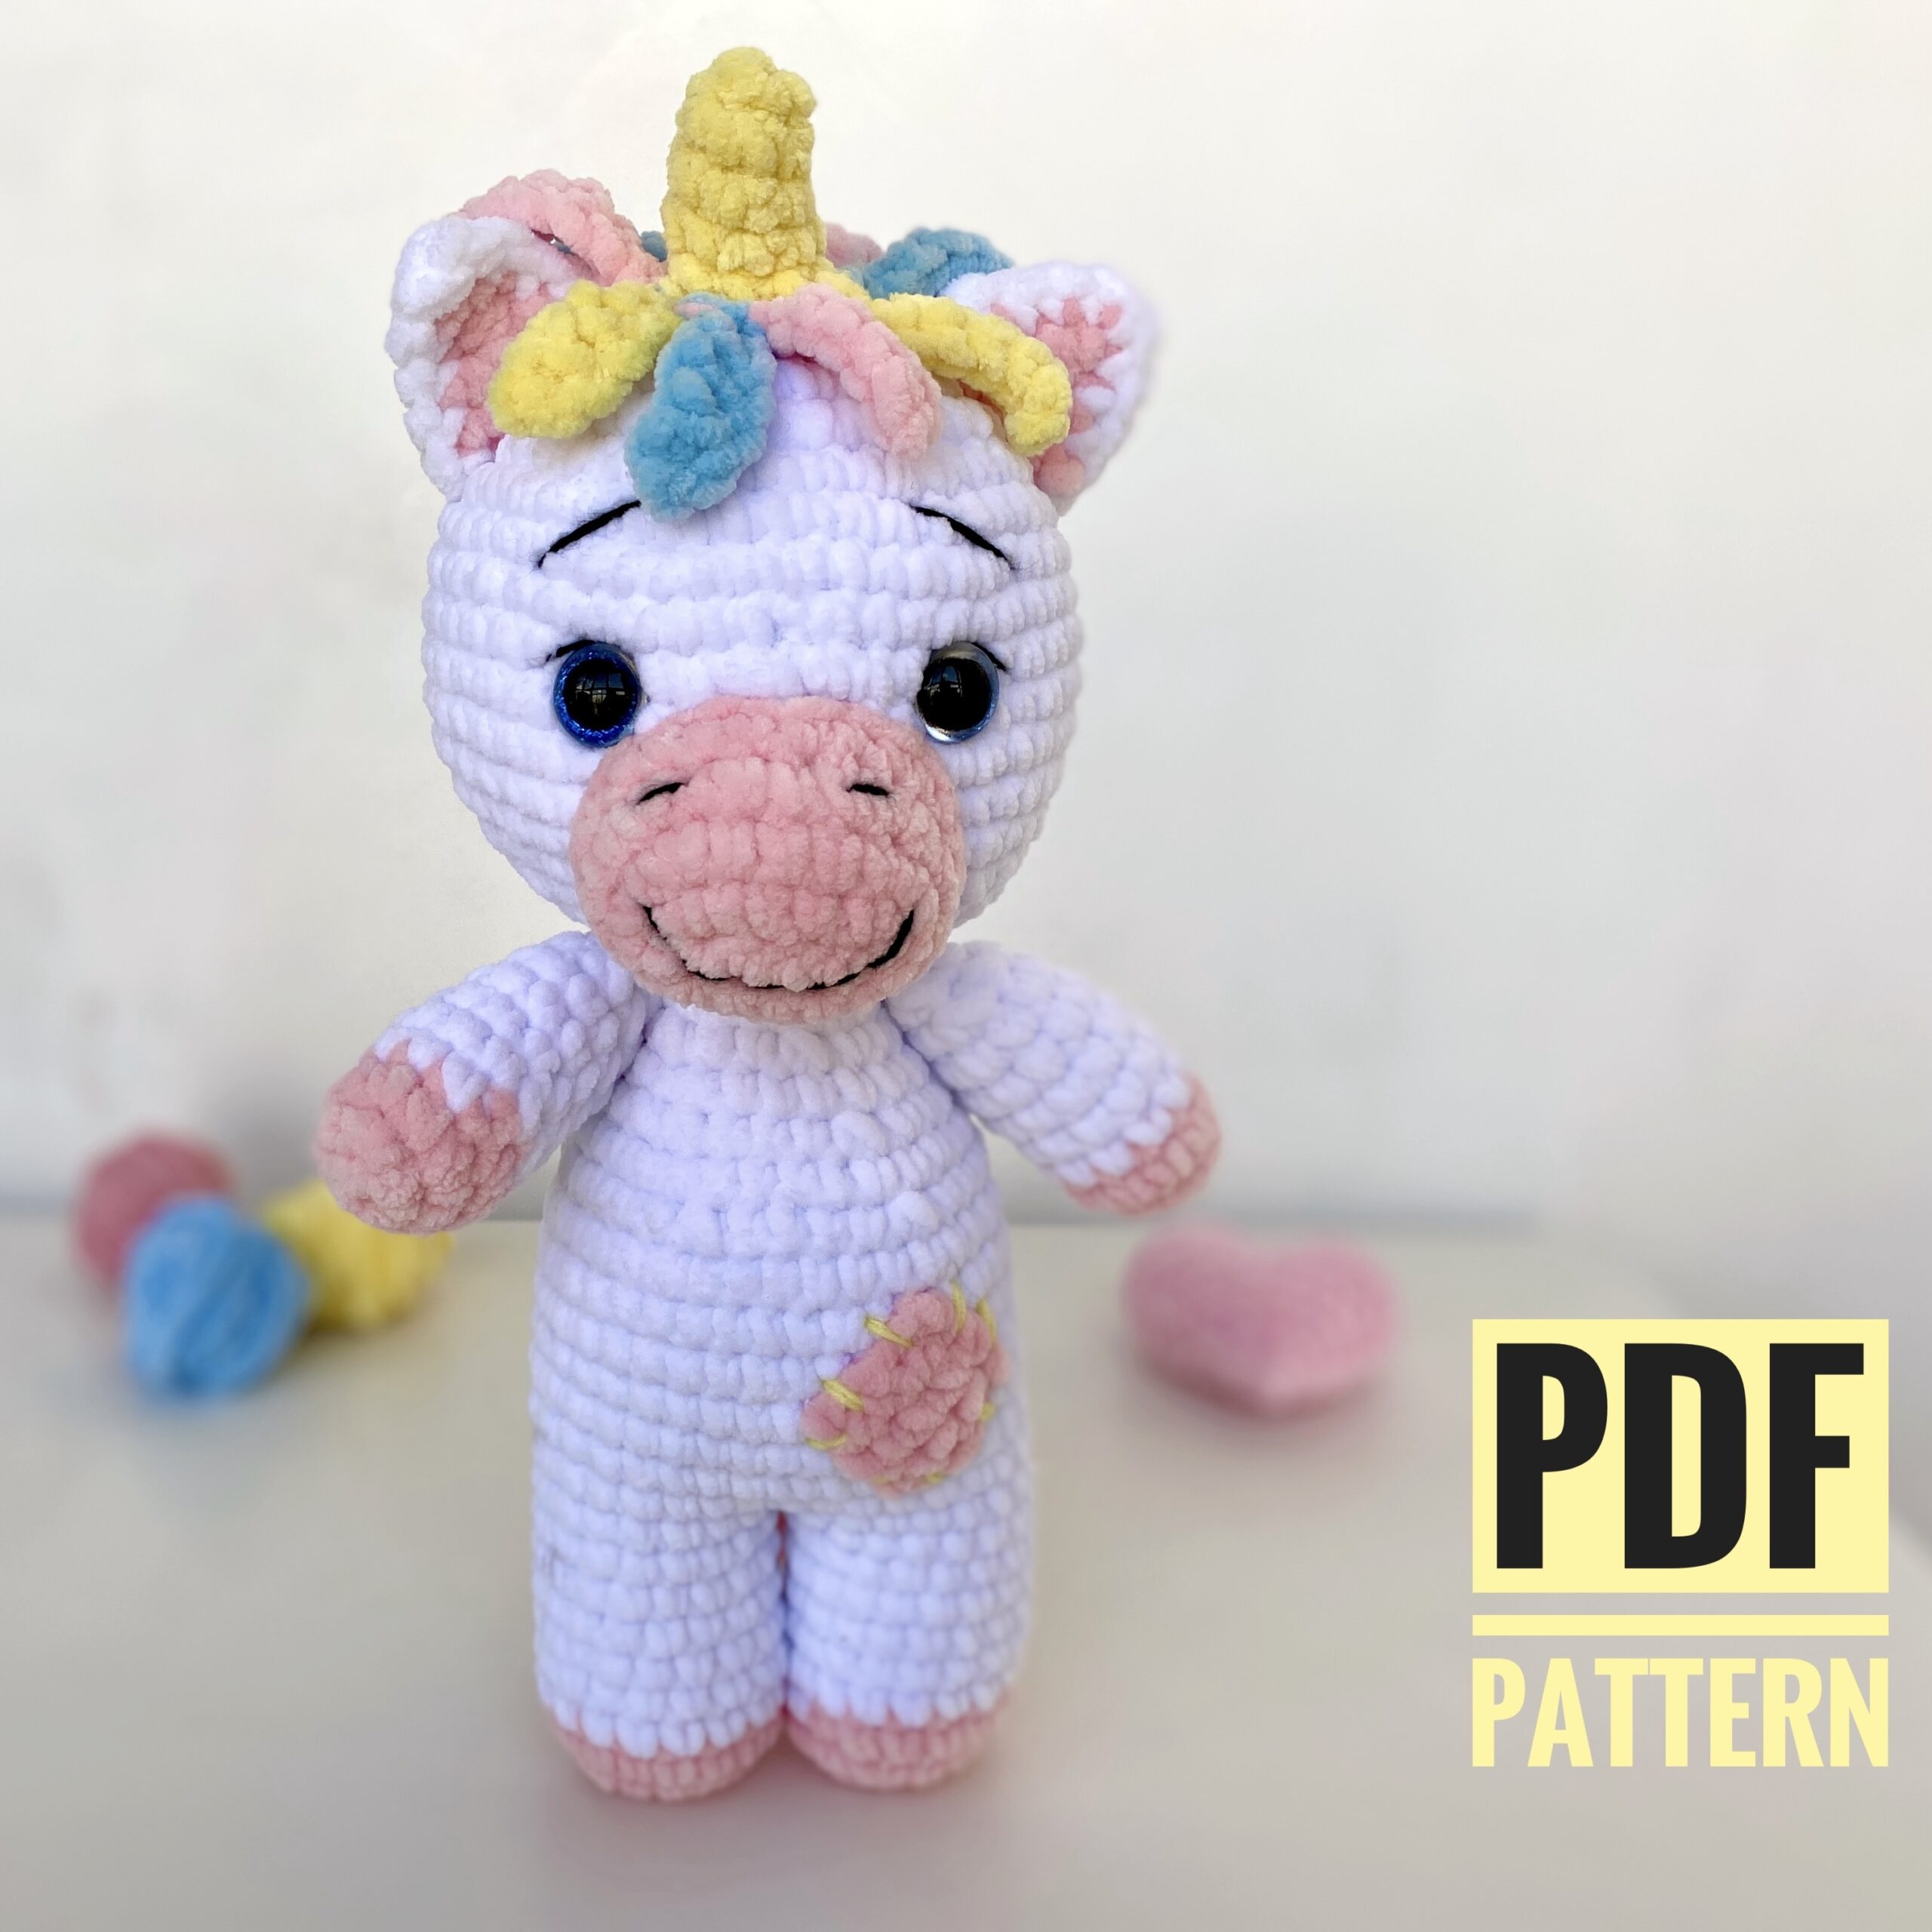 Unicorn plush amigurumi Crochet pattern by Creations by Jamie M